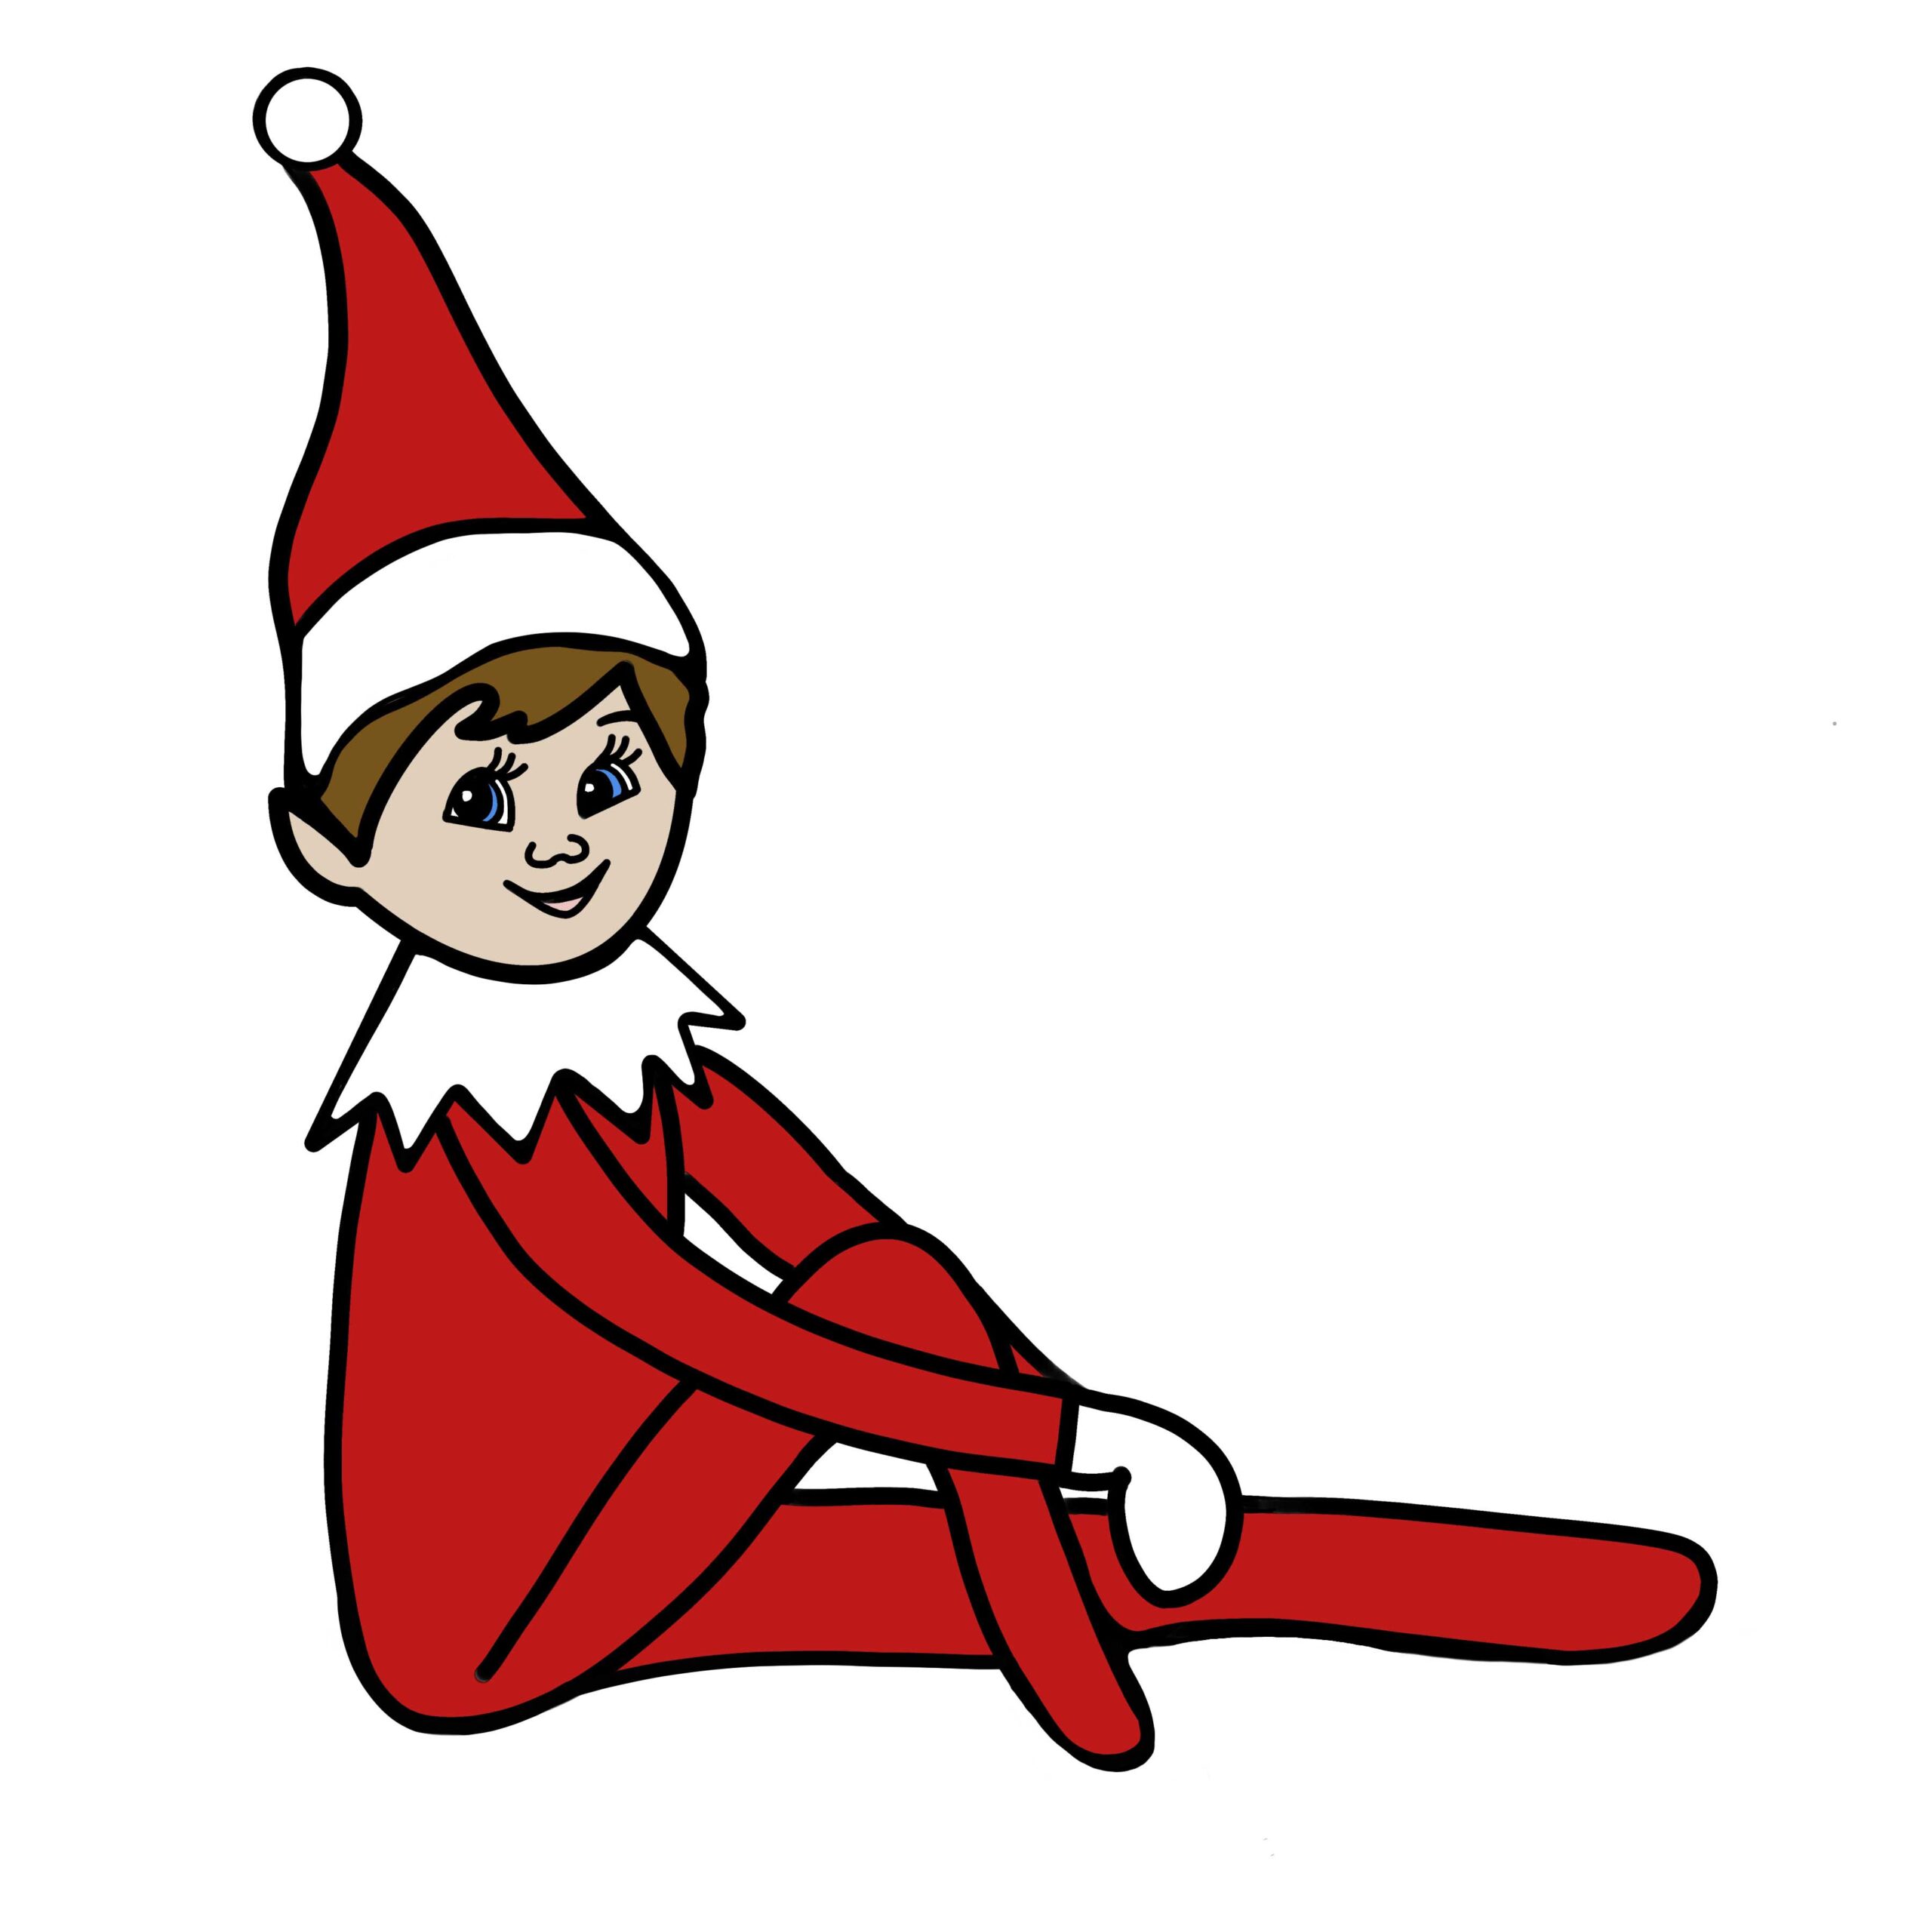 elf on the shelf cartoon image